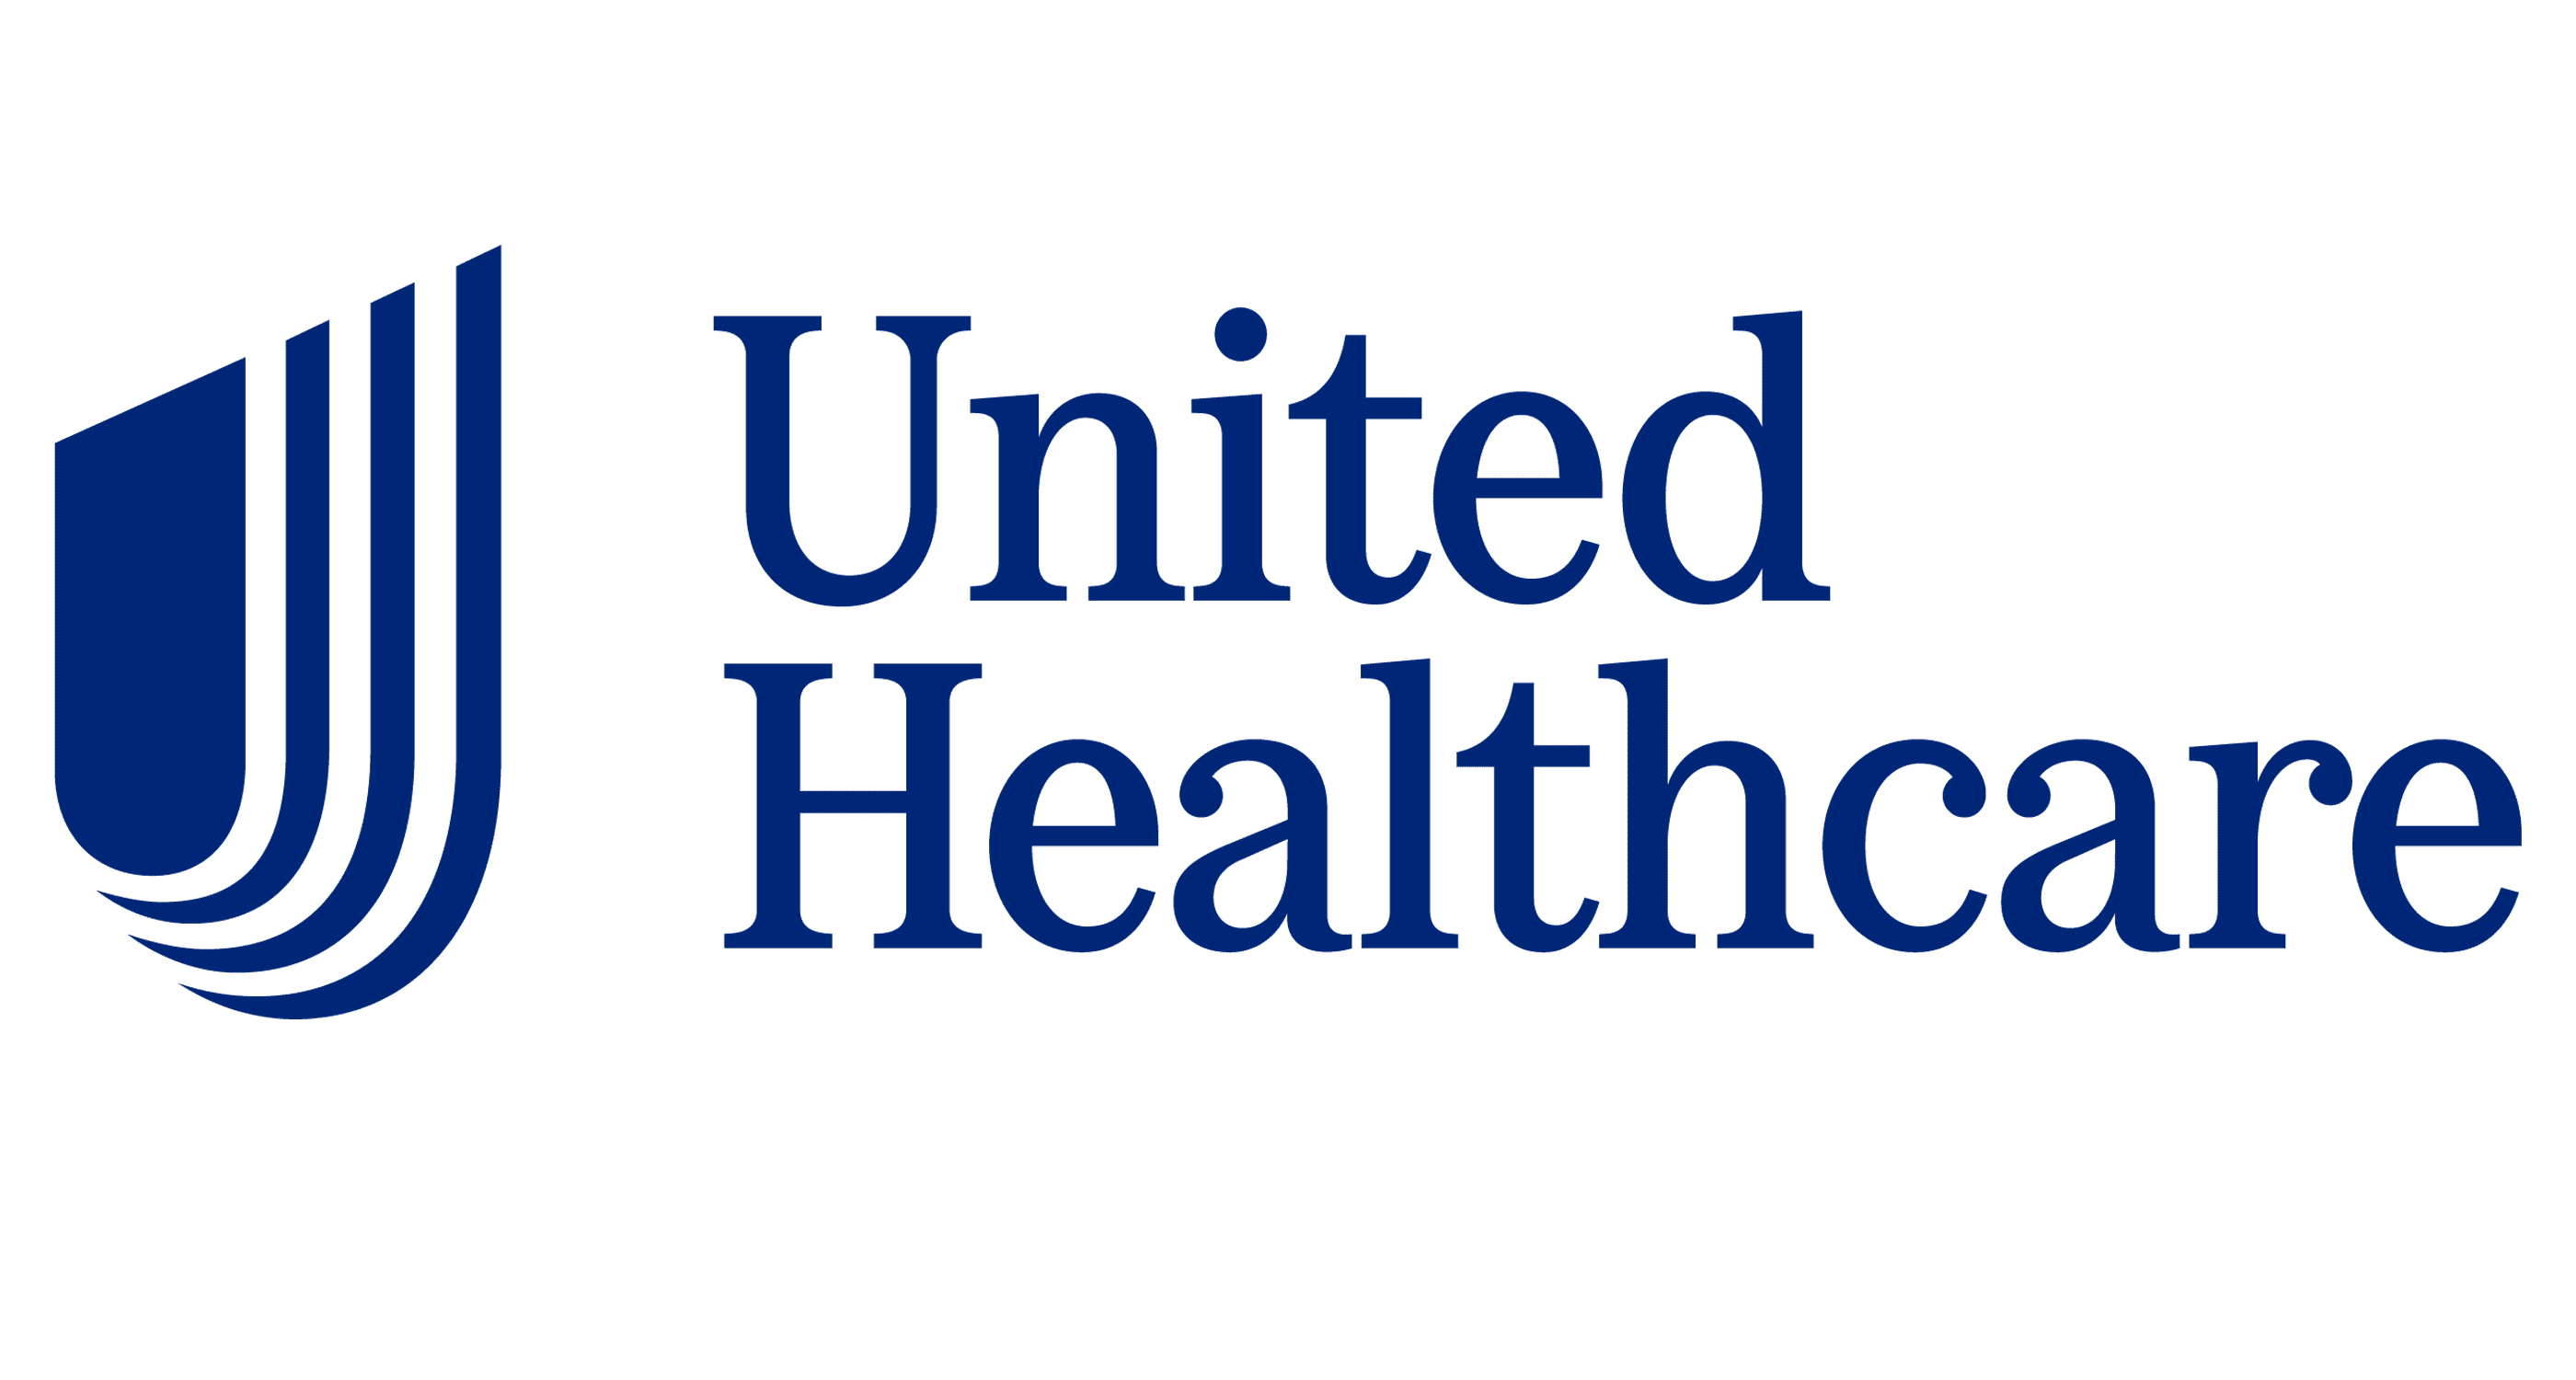 United Healthcare (Nivel 3)